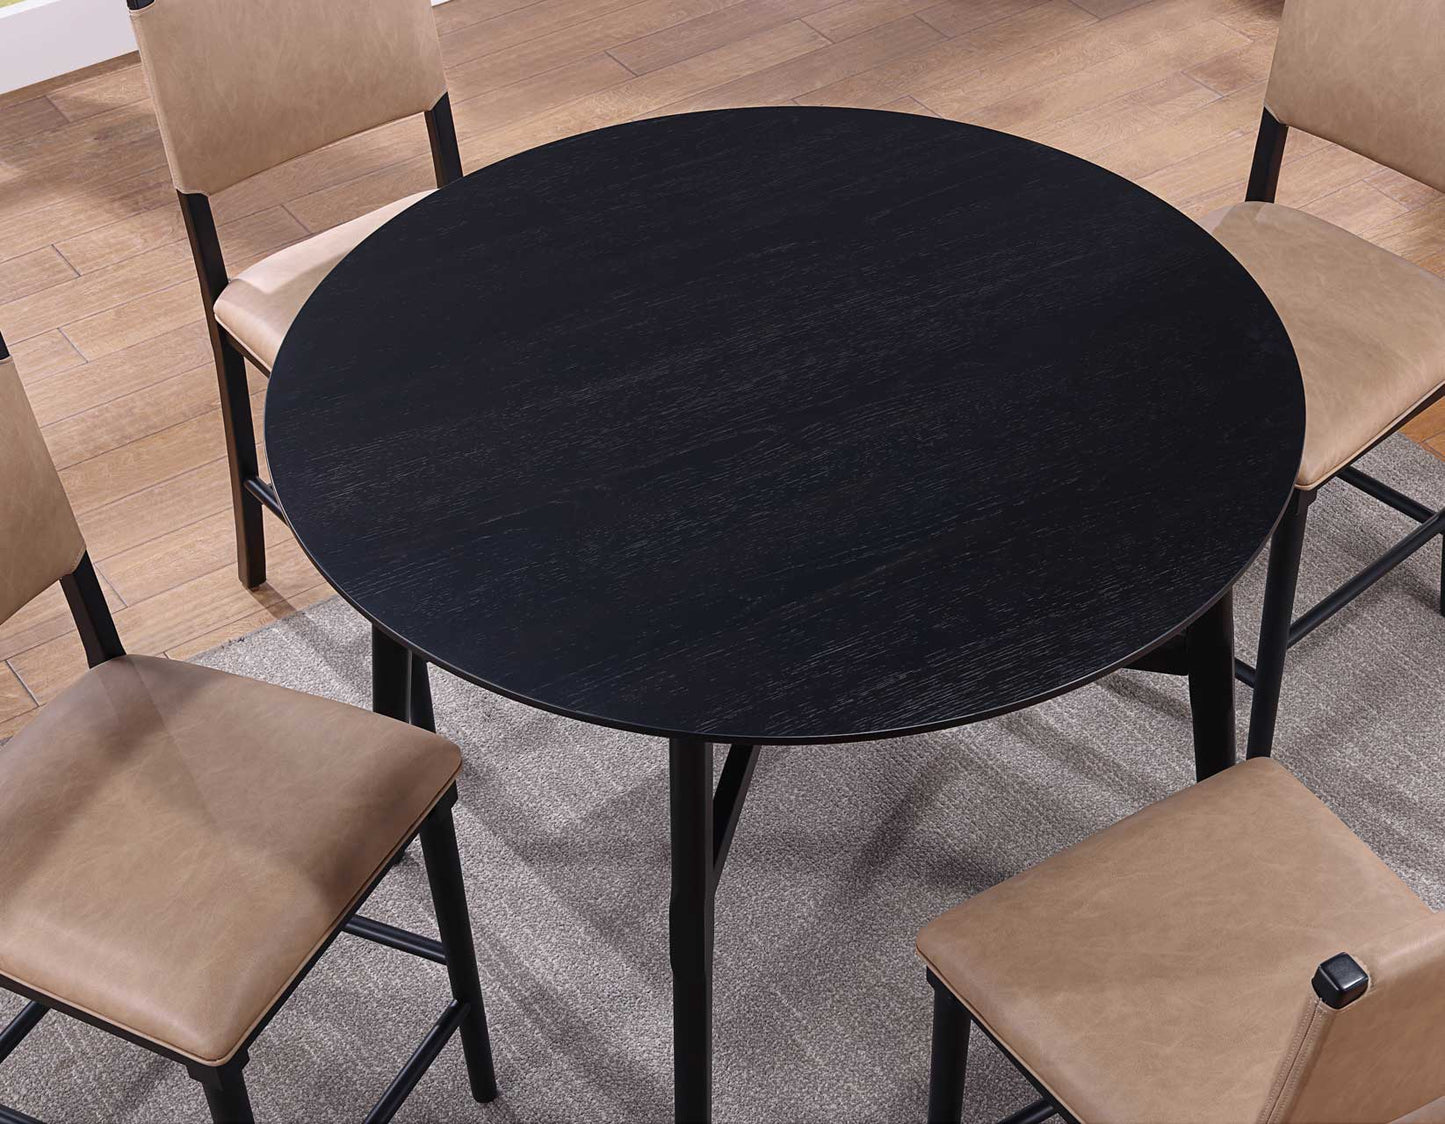 Oslo 46″ Round Counter Table, Black